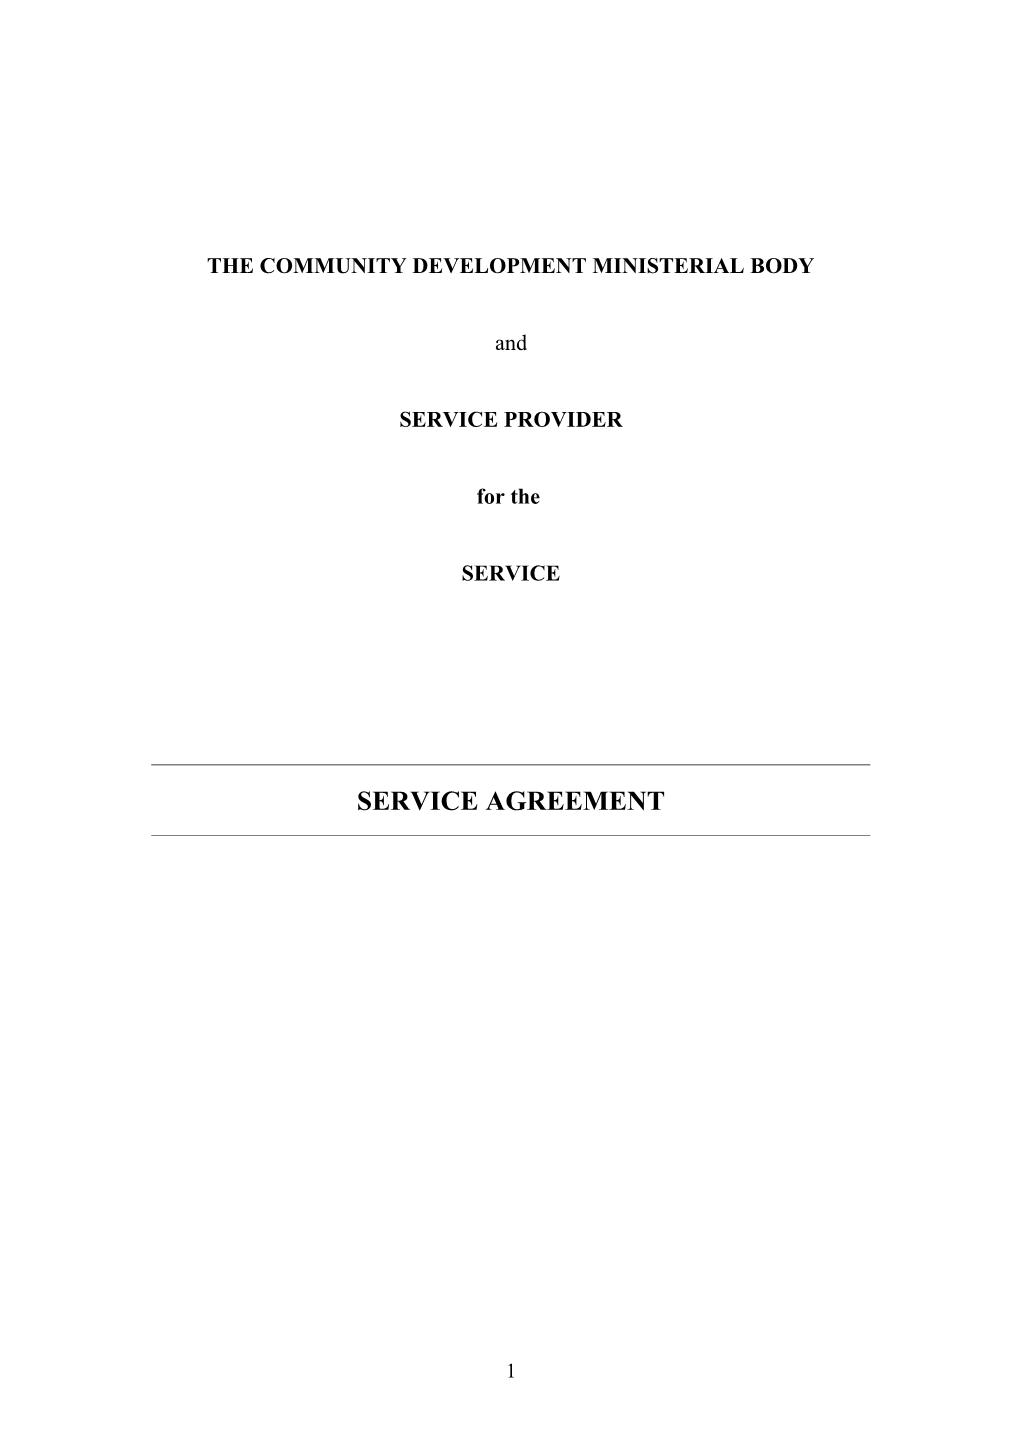 The Community Development Ministerial Body